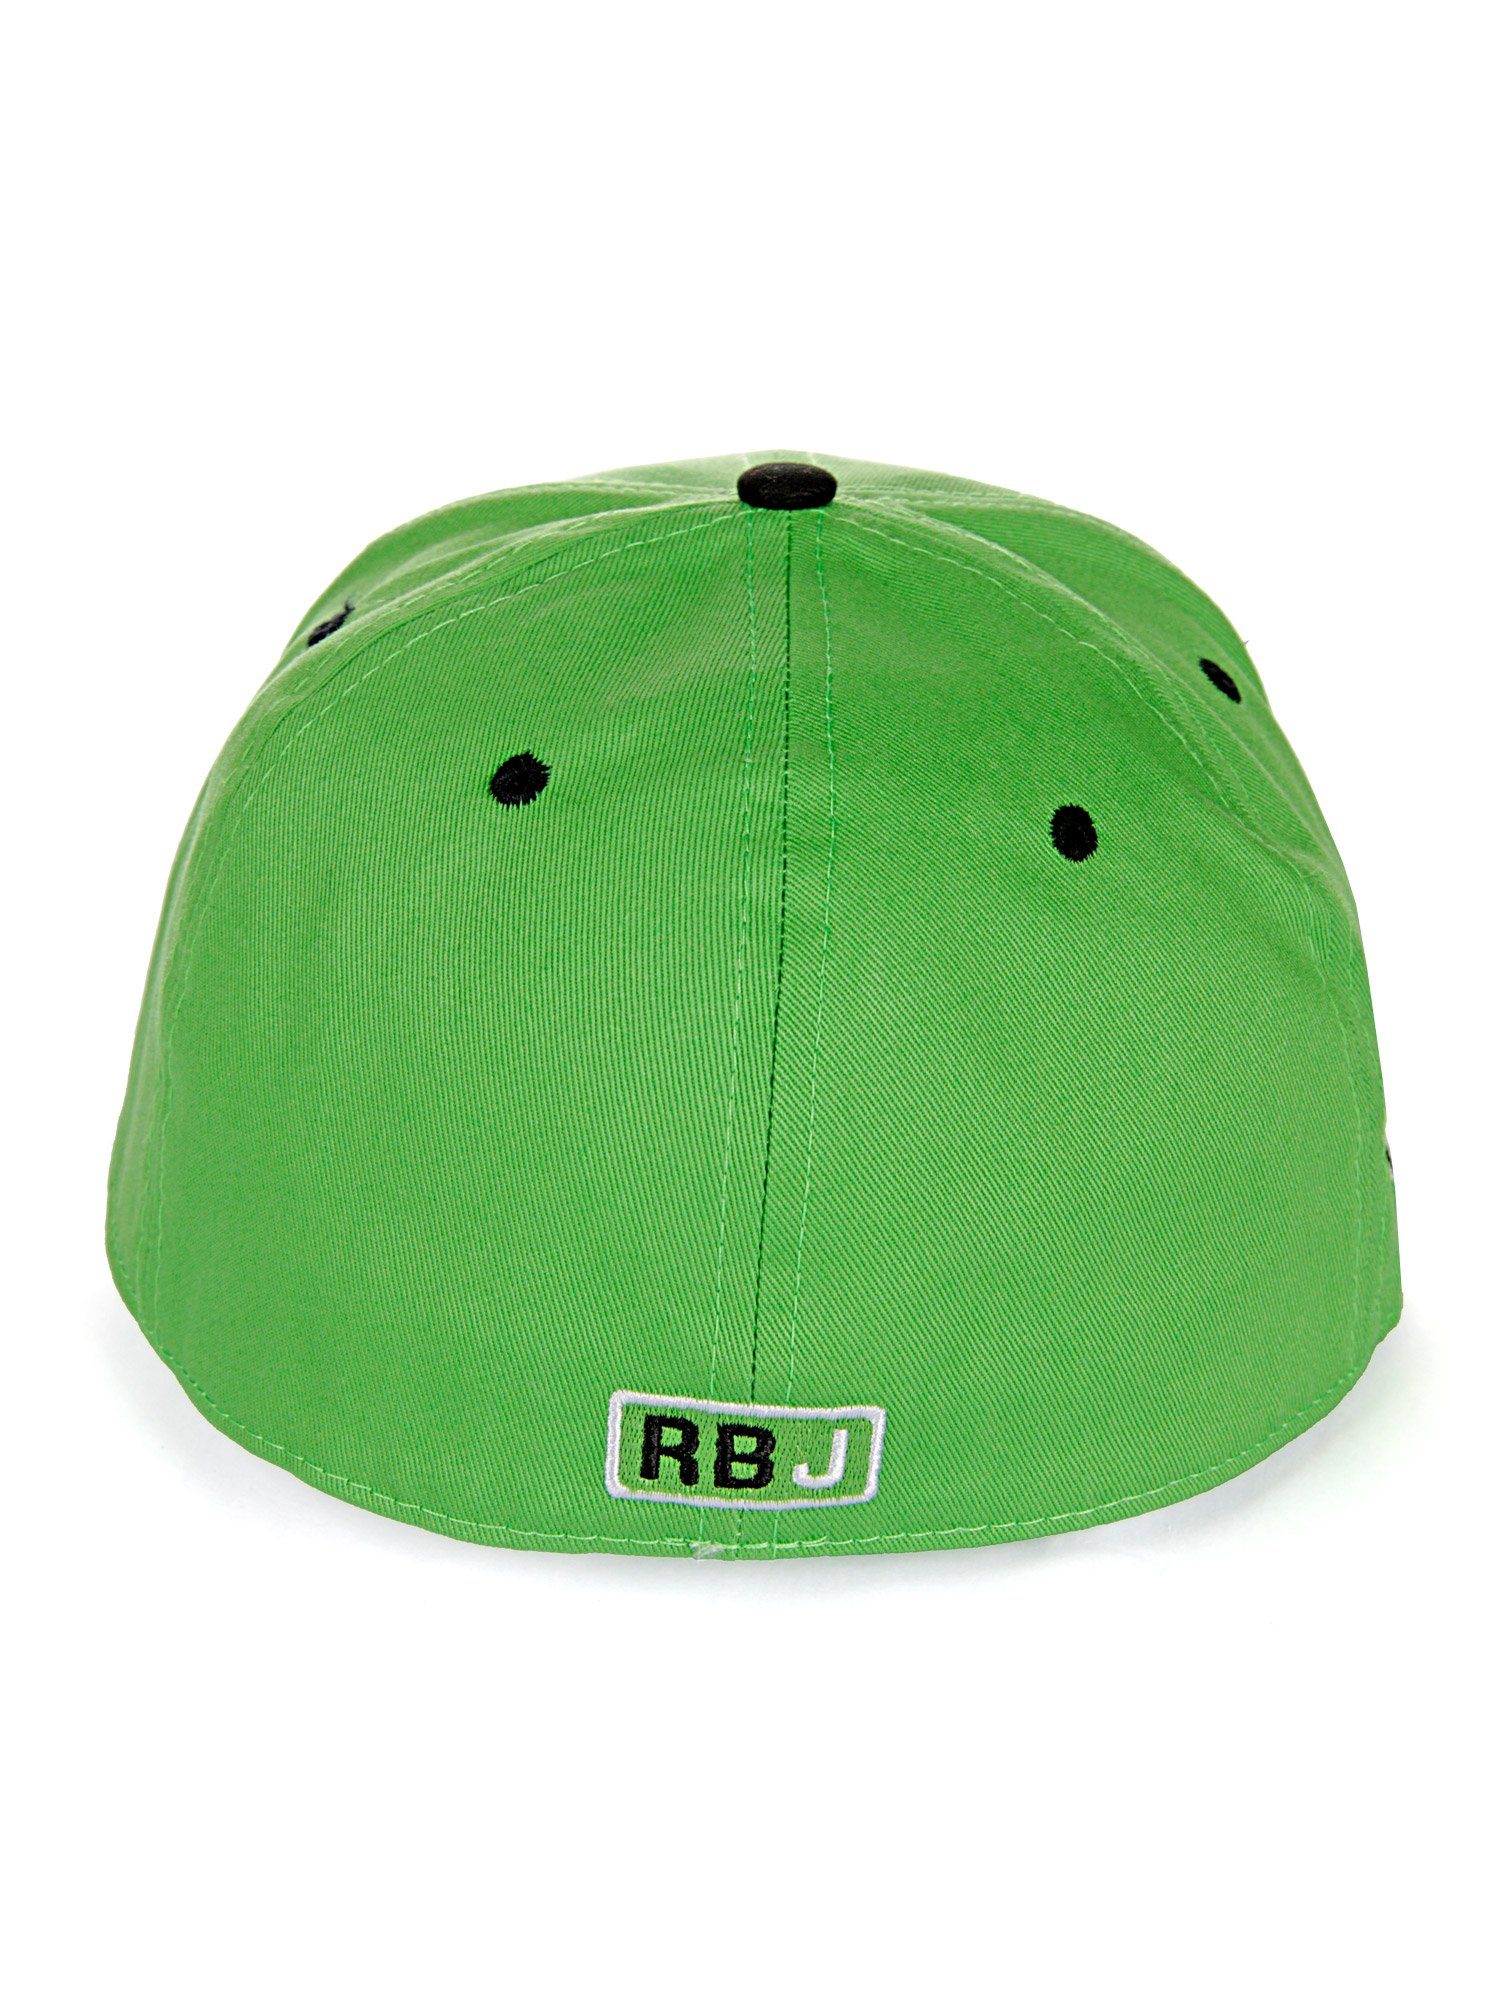 RedBridge Baseball Cap Durham grün-schwarz Schirm mit kontrastfarbigem